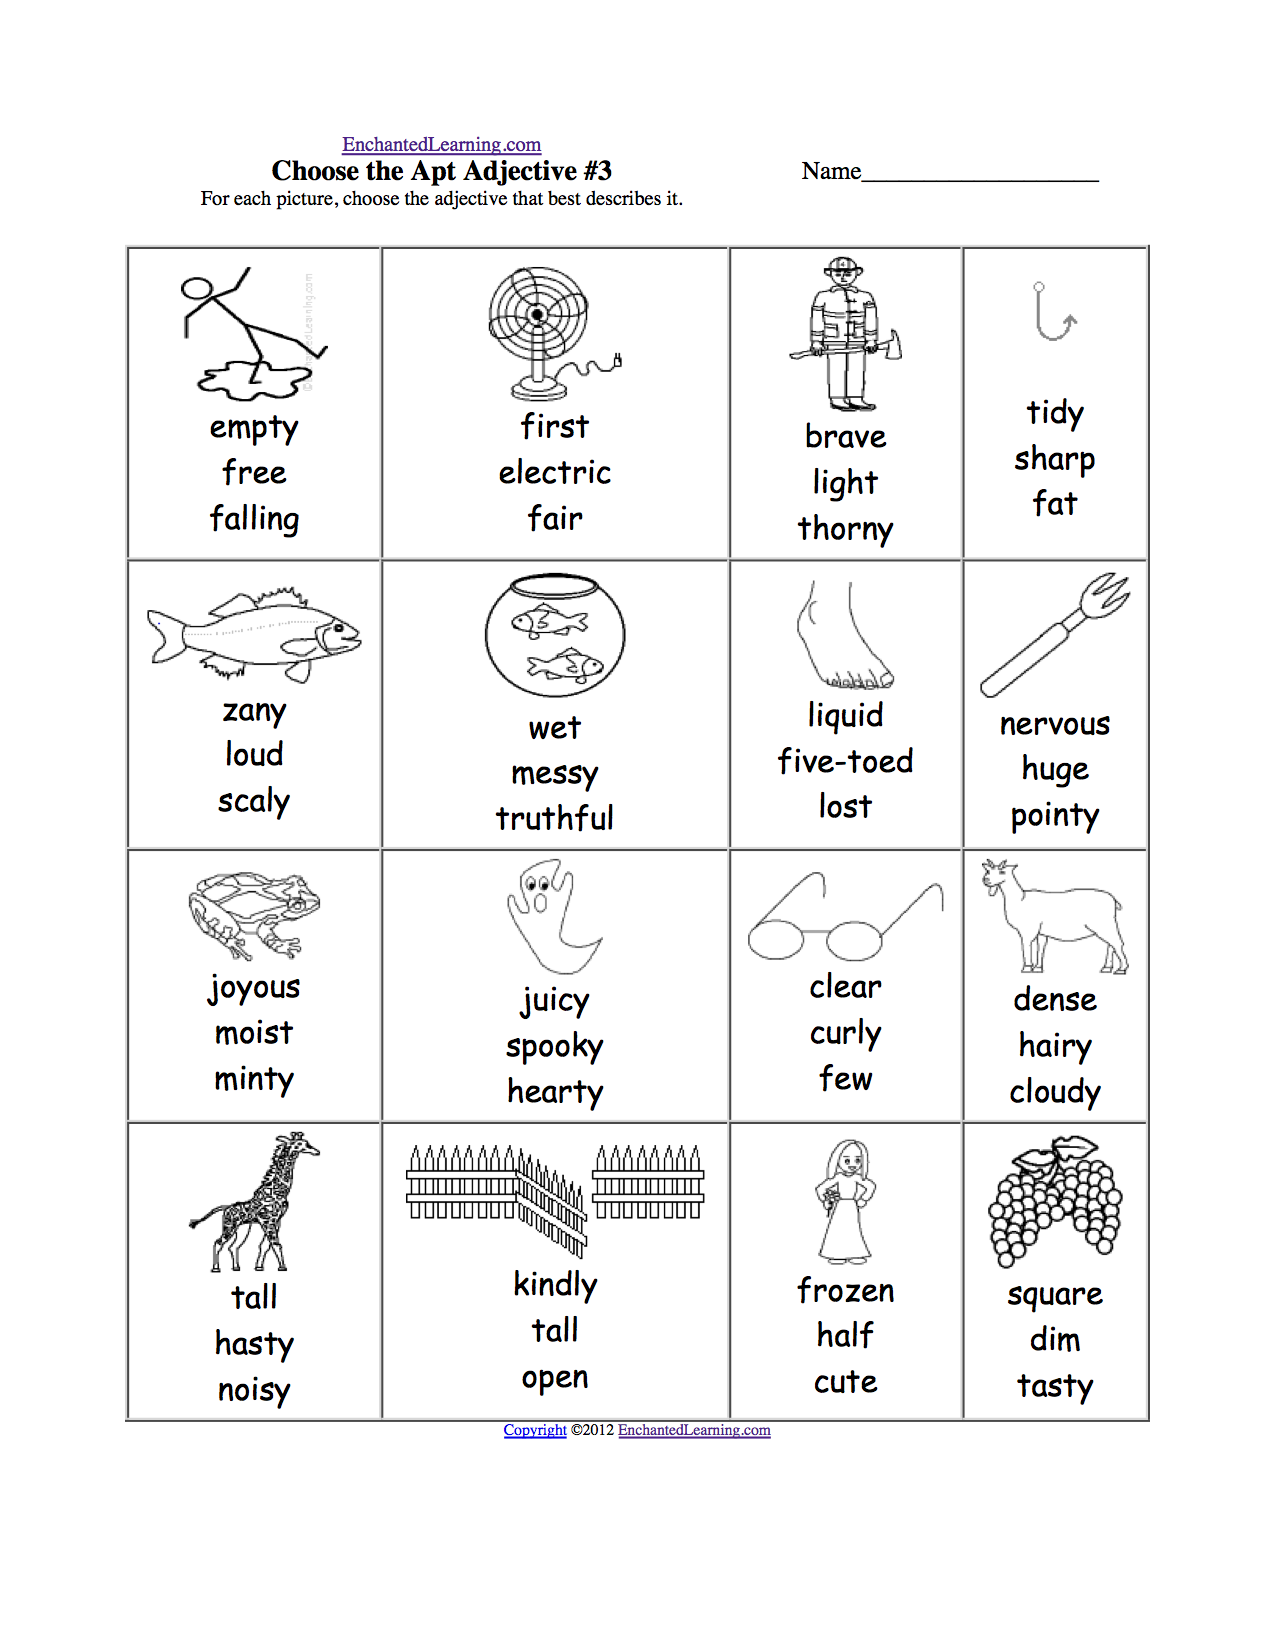 adjectives-vocabulary-word-list-enchantedlearning